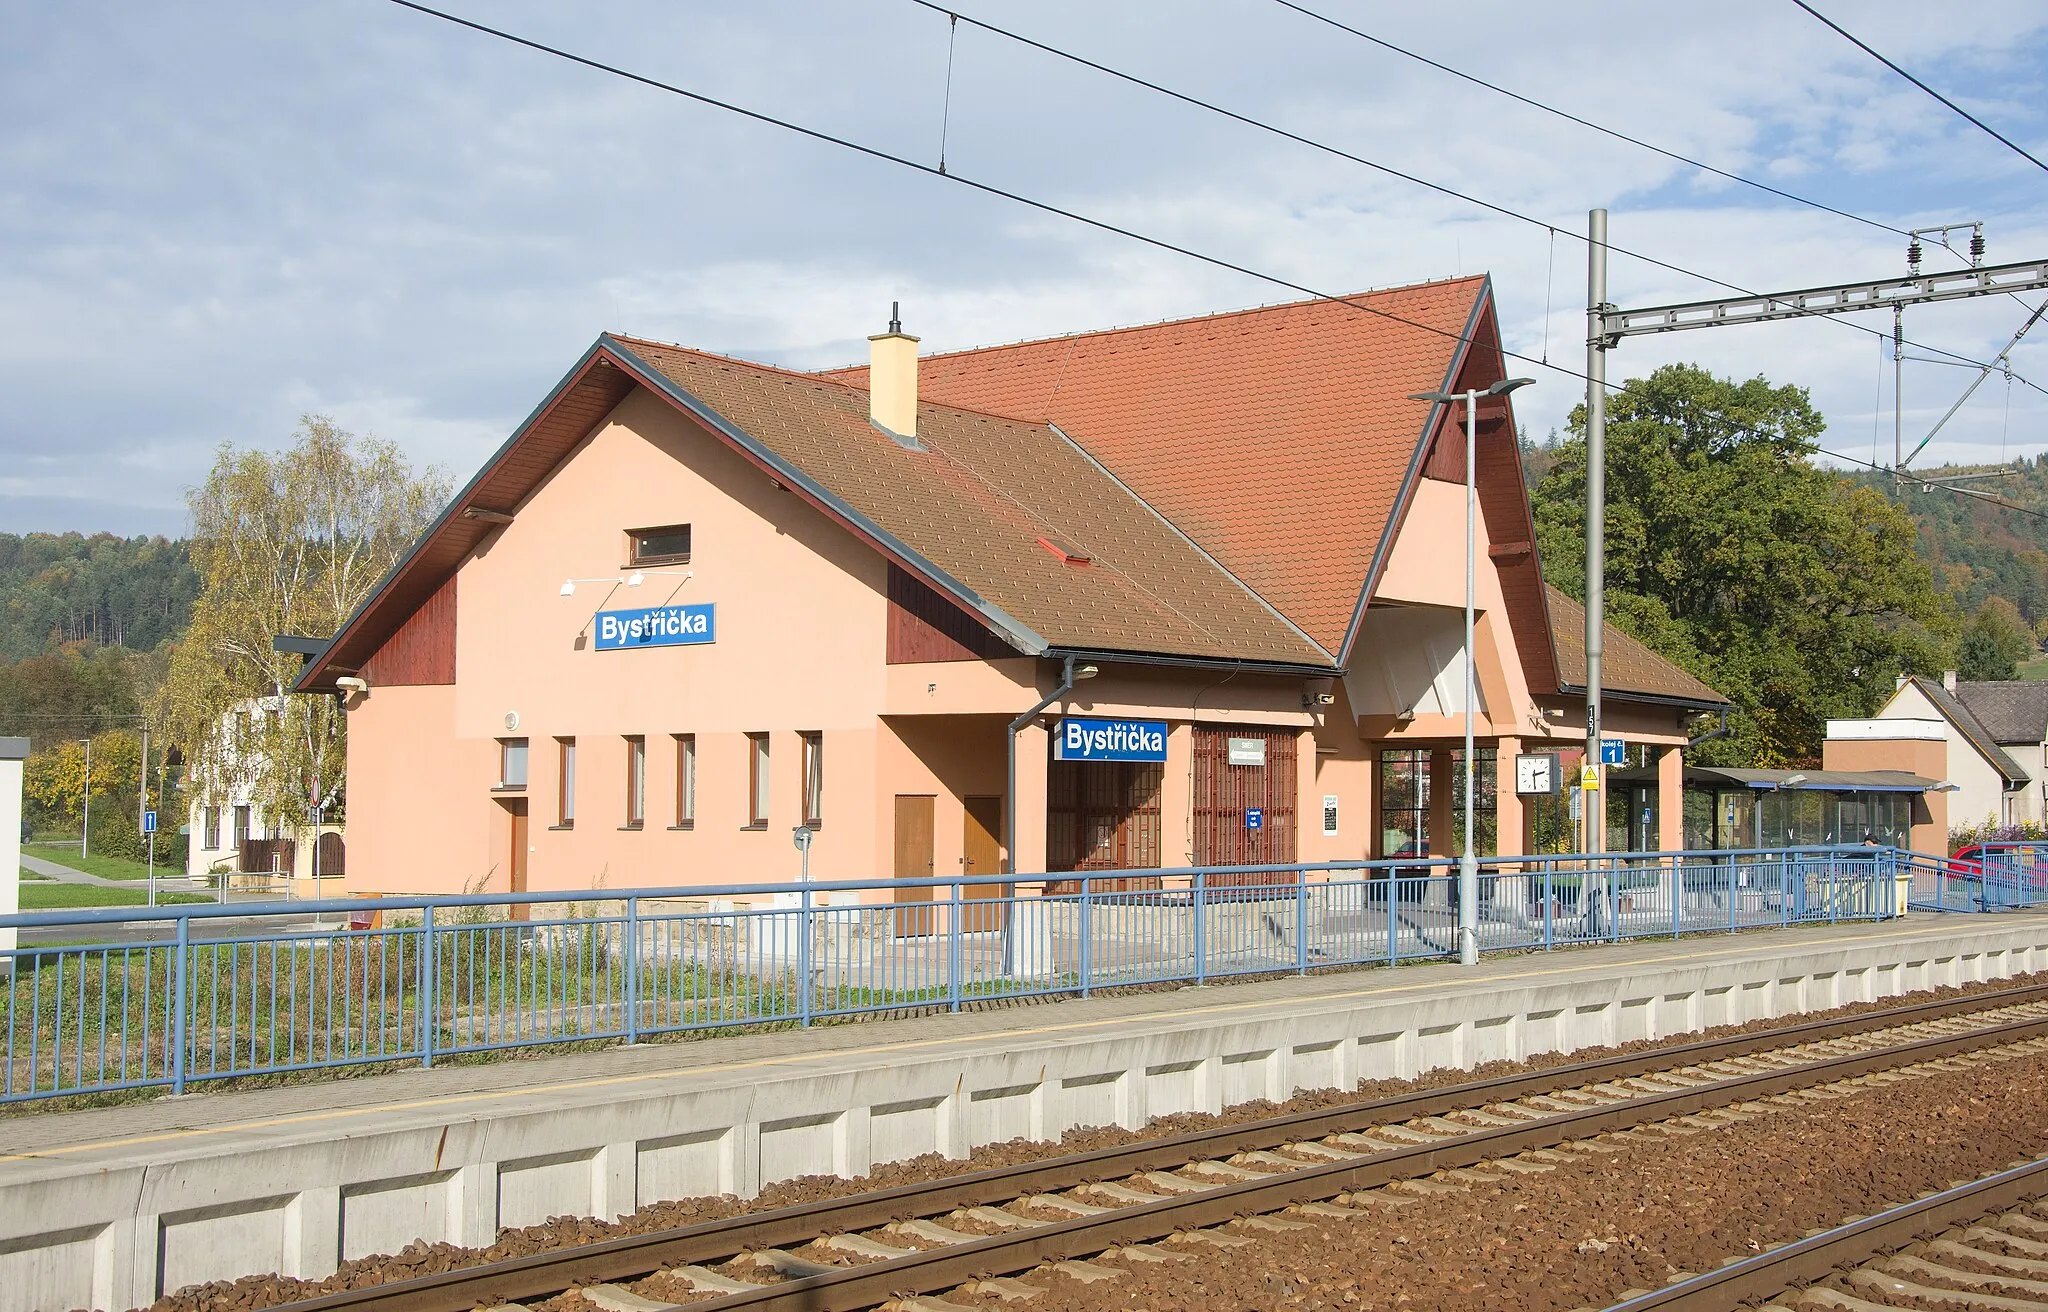 Photo showing: Bystřička railway stop, the Czech Republic